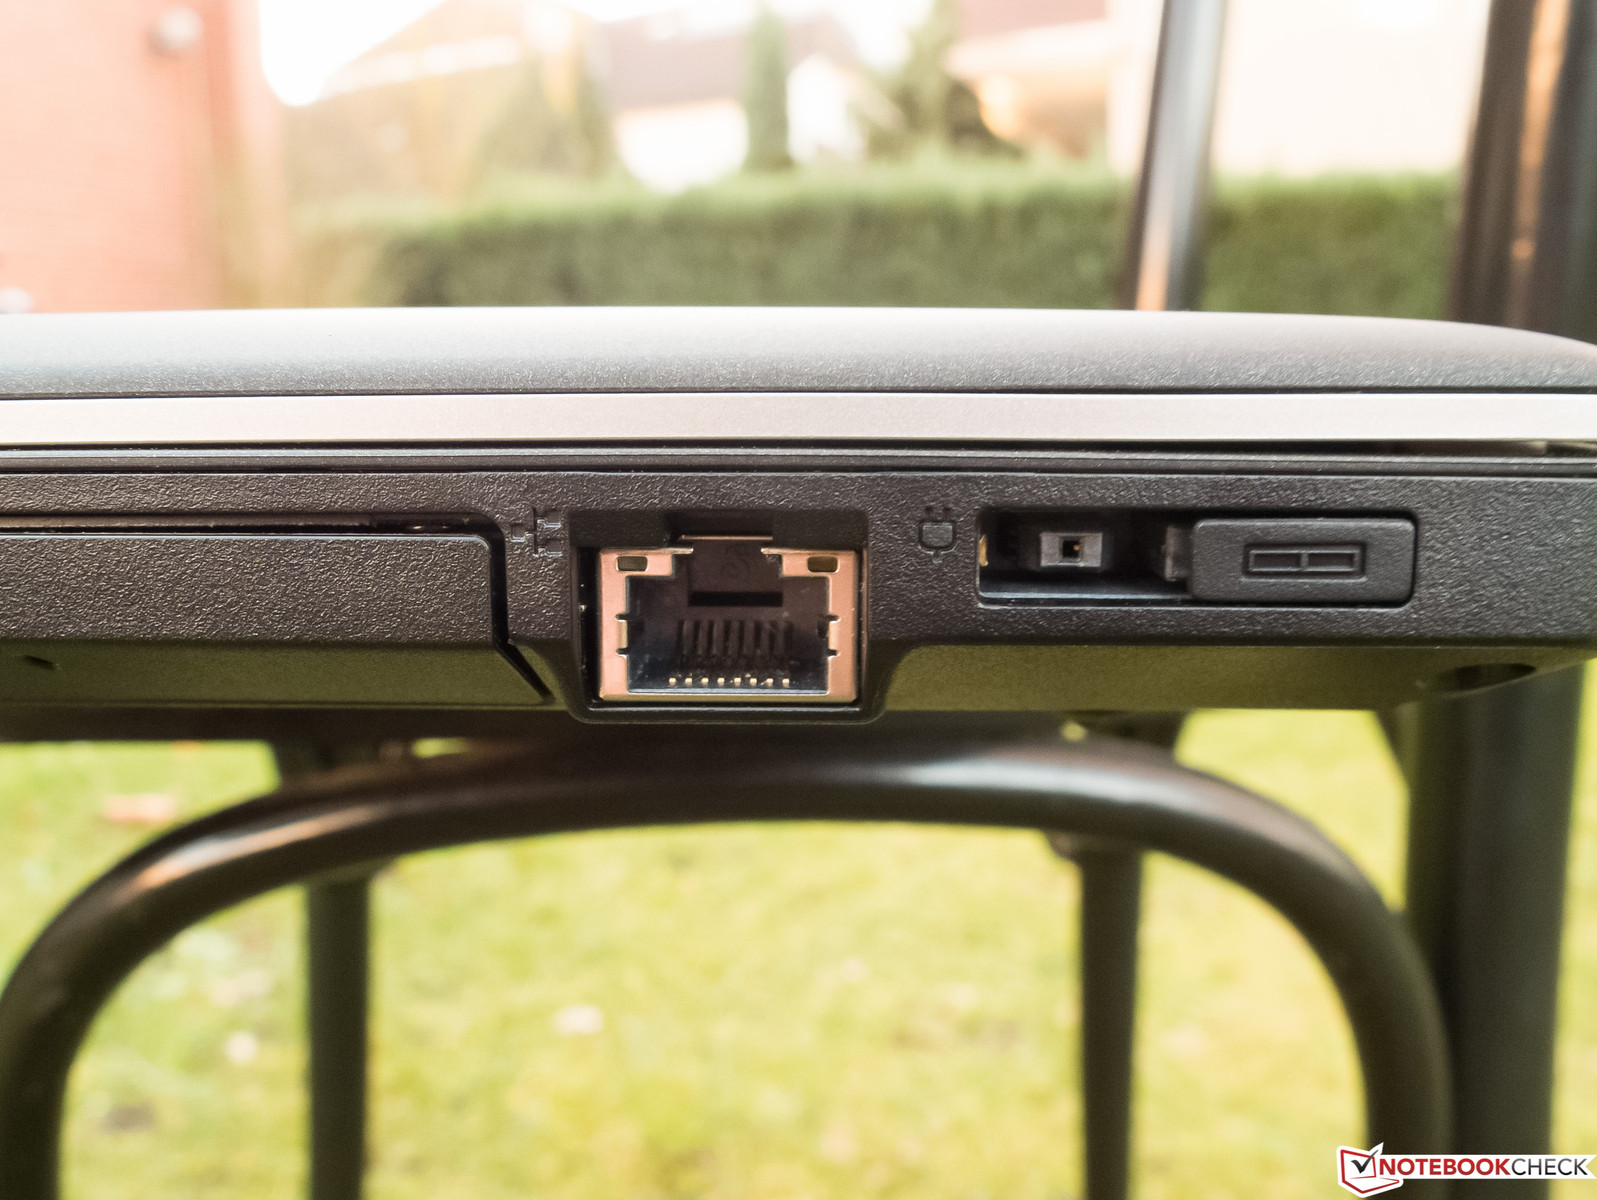 Ноутбук Lenovo Thinkpad Edge E540 Характеристики